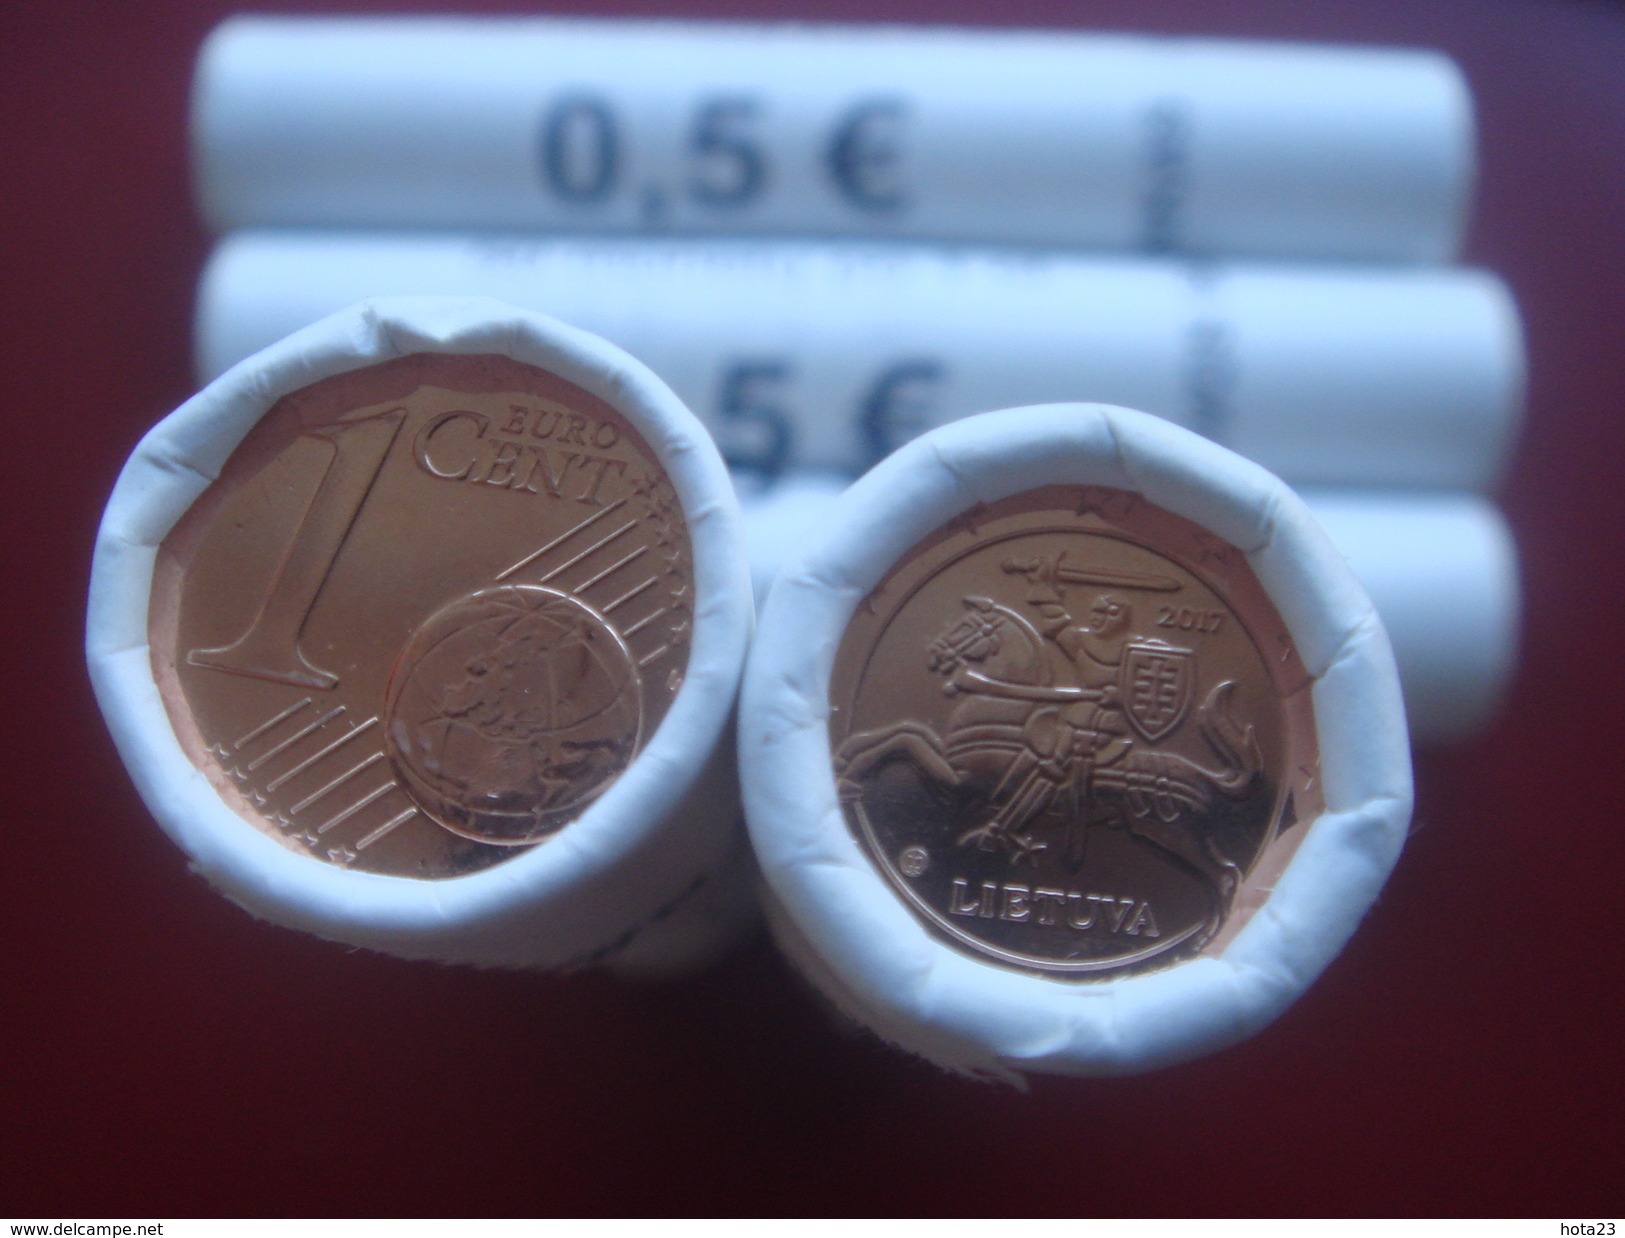 Neu Lithuania Litauen Lietuva  1 Euro Cent 2017  Münzen 1 Roll  UNC  50 COINS - Rouleaux